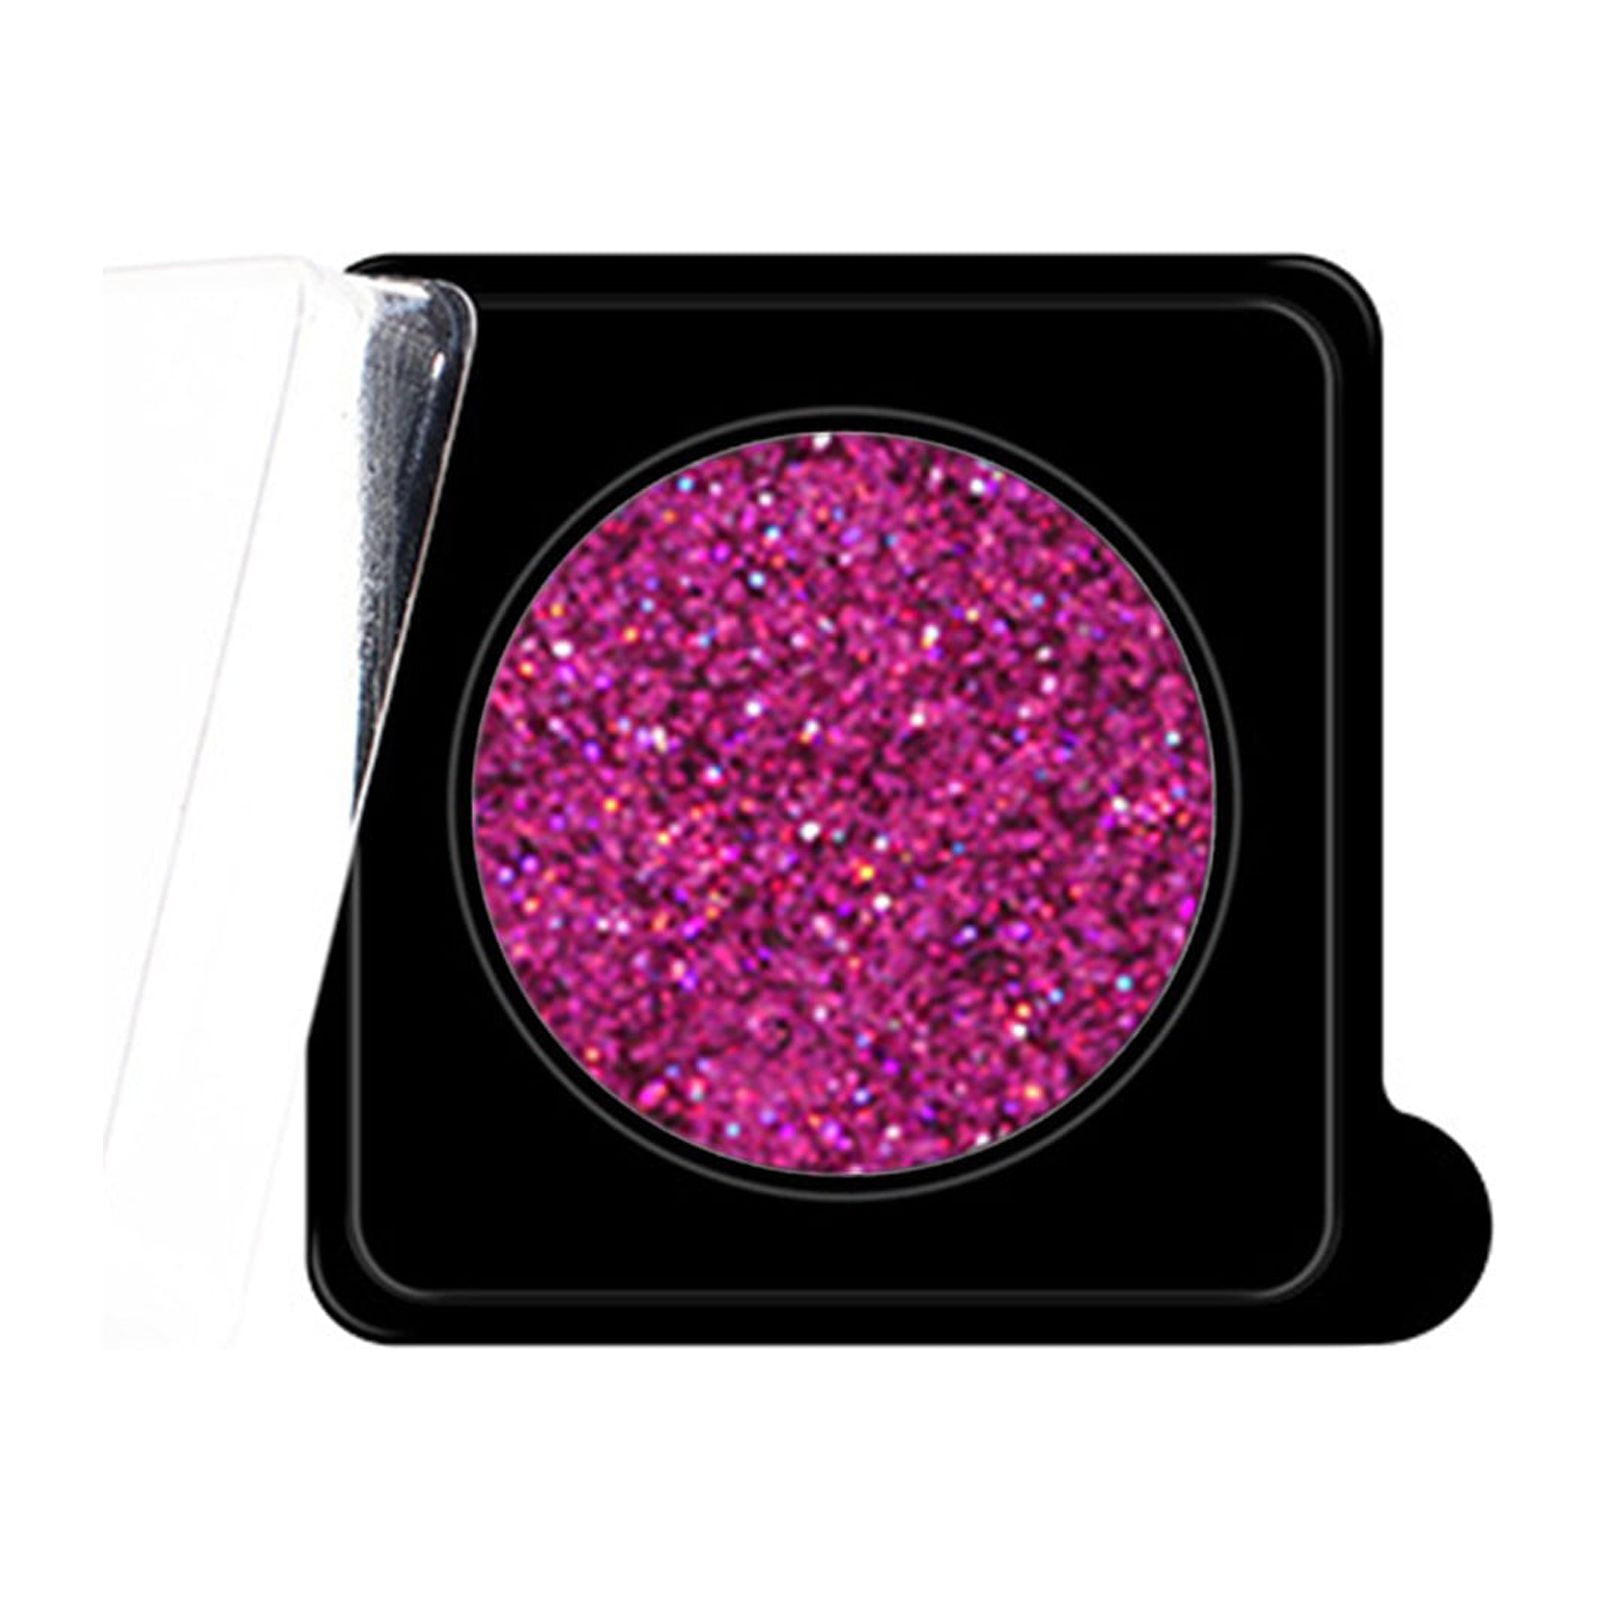 43 Glitzy NYE Makeup Ideas - StayGlam  Pink eye makeup, New years eve  makeup, Glitter eye makeup